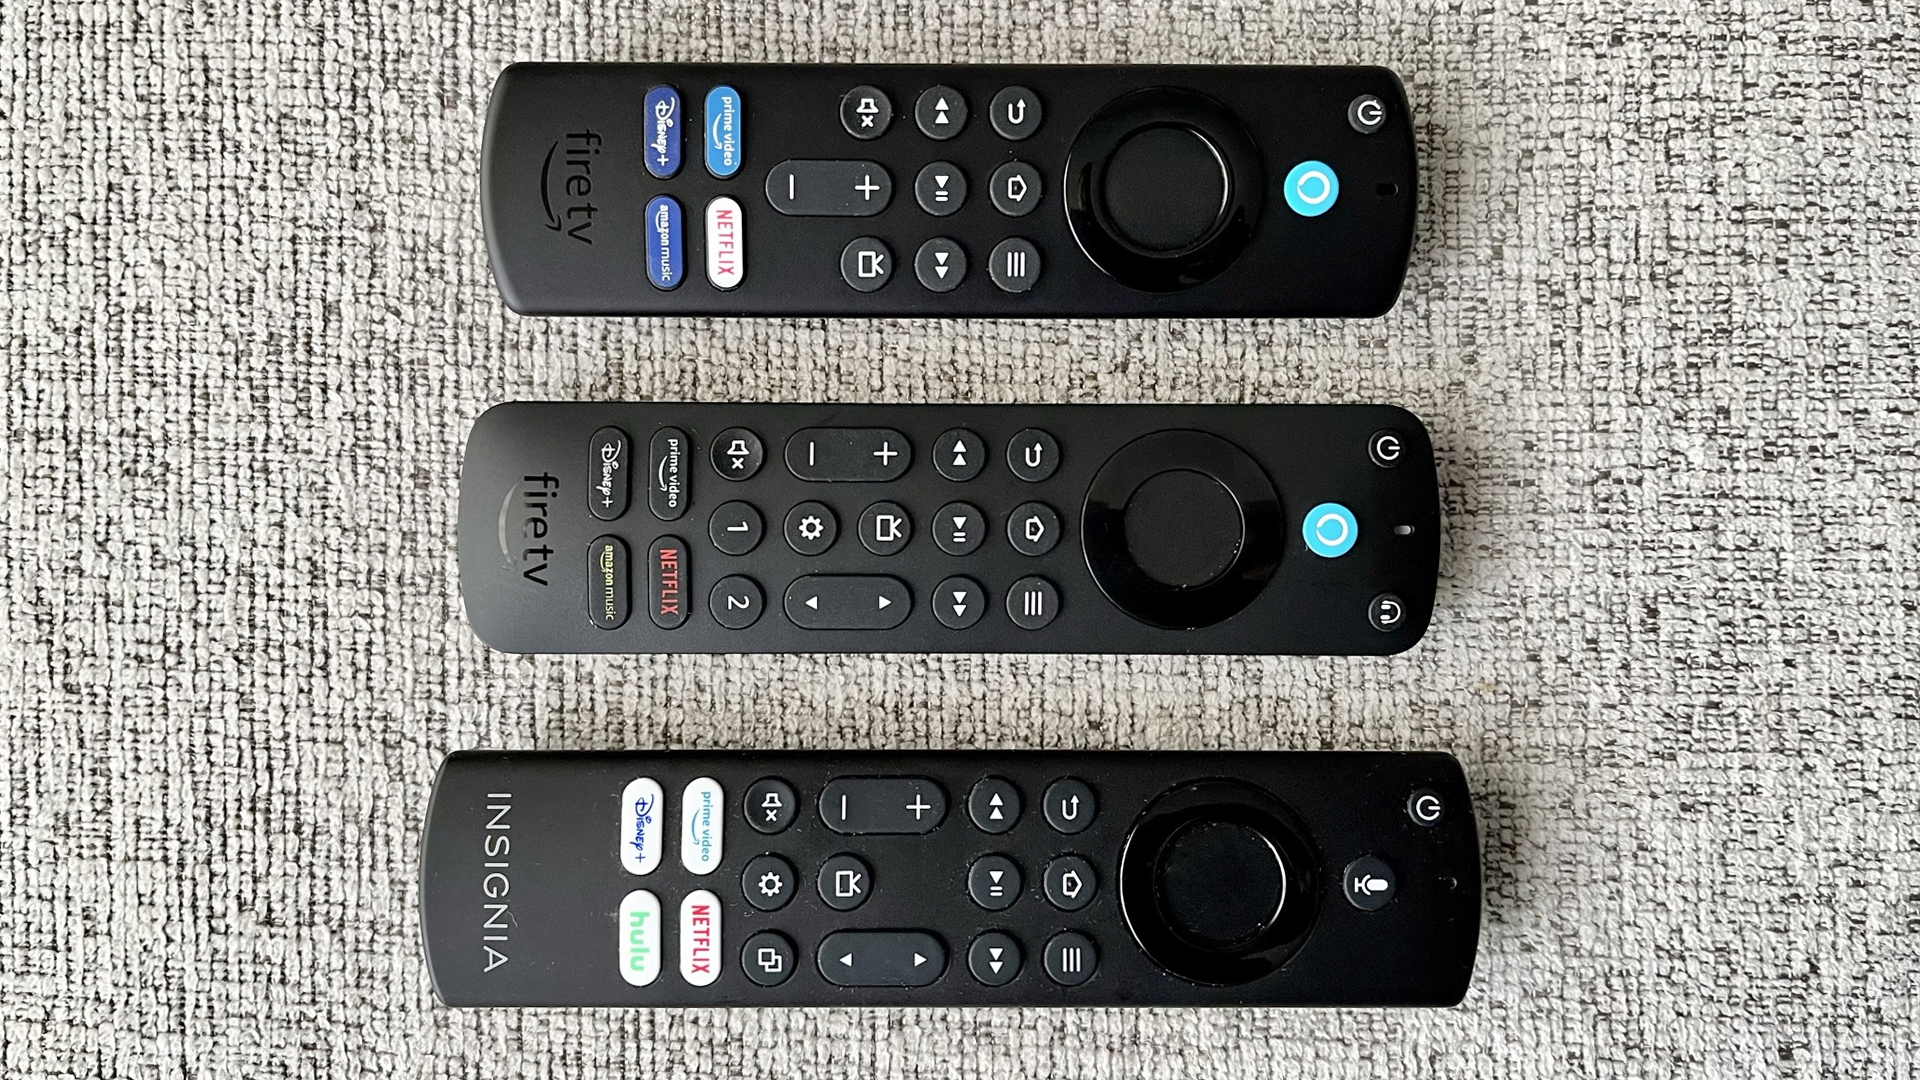 Tiga remote Alexa Fire TV dibandingkan